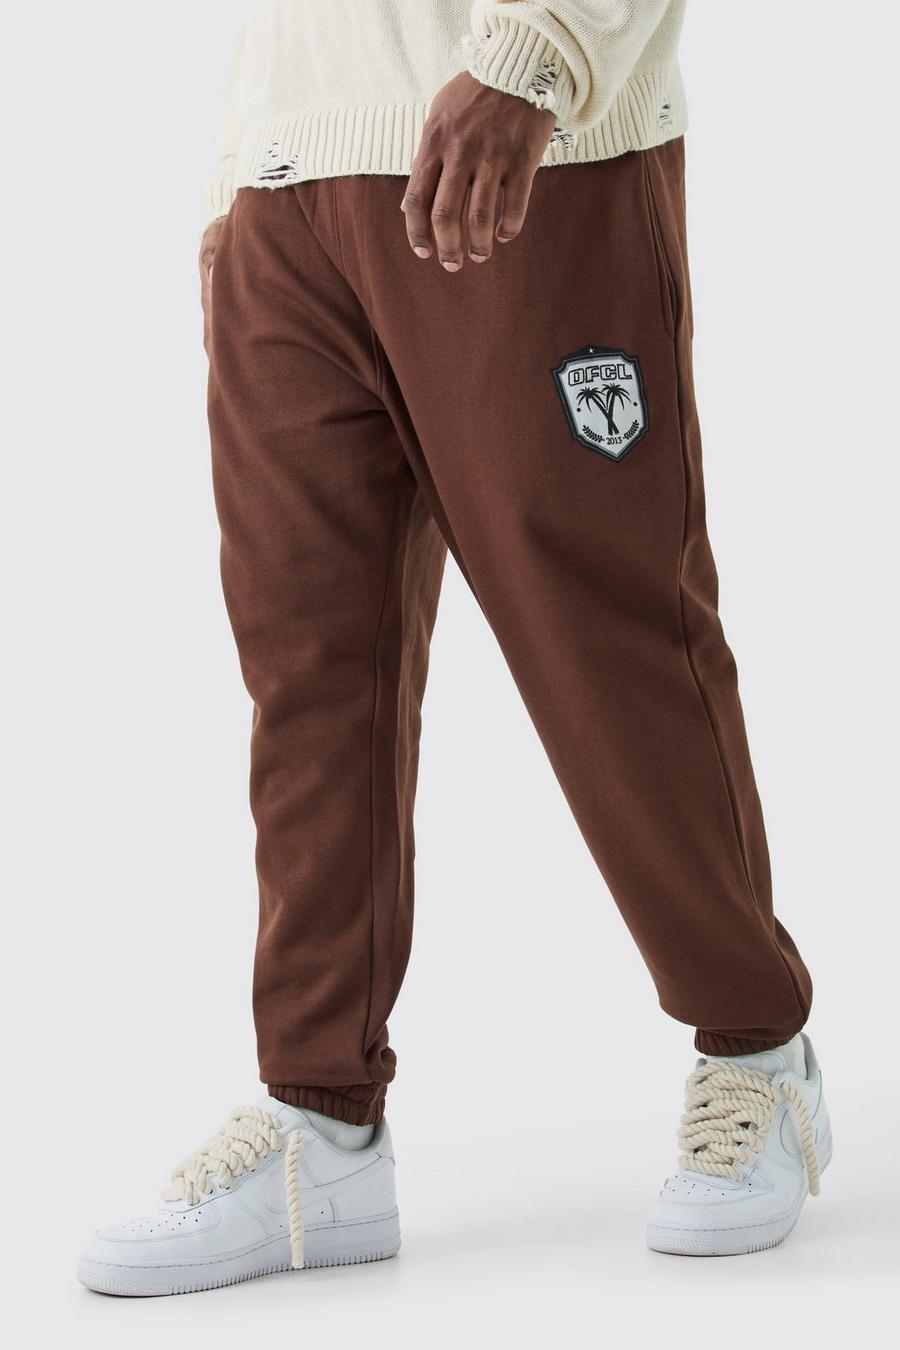 Pantaloni tuta Plus Size Core Team Ofcl color cioccolato, Chocolate